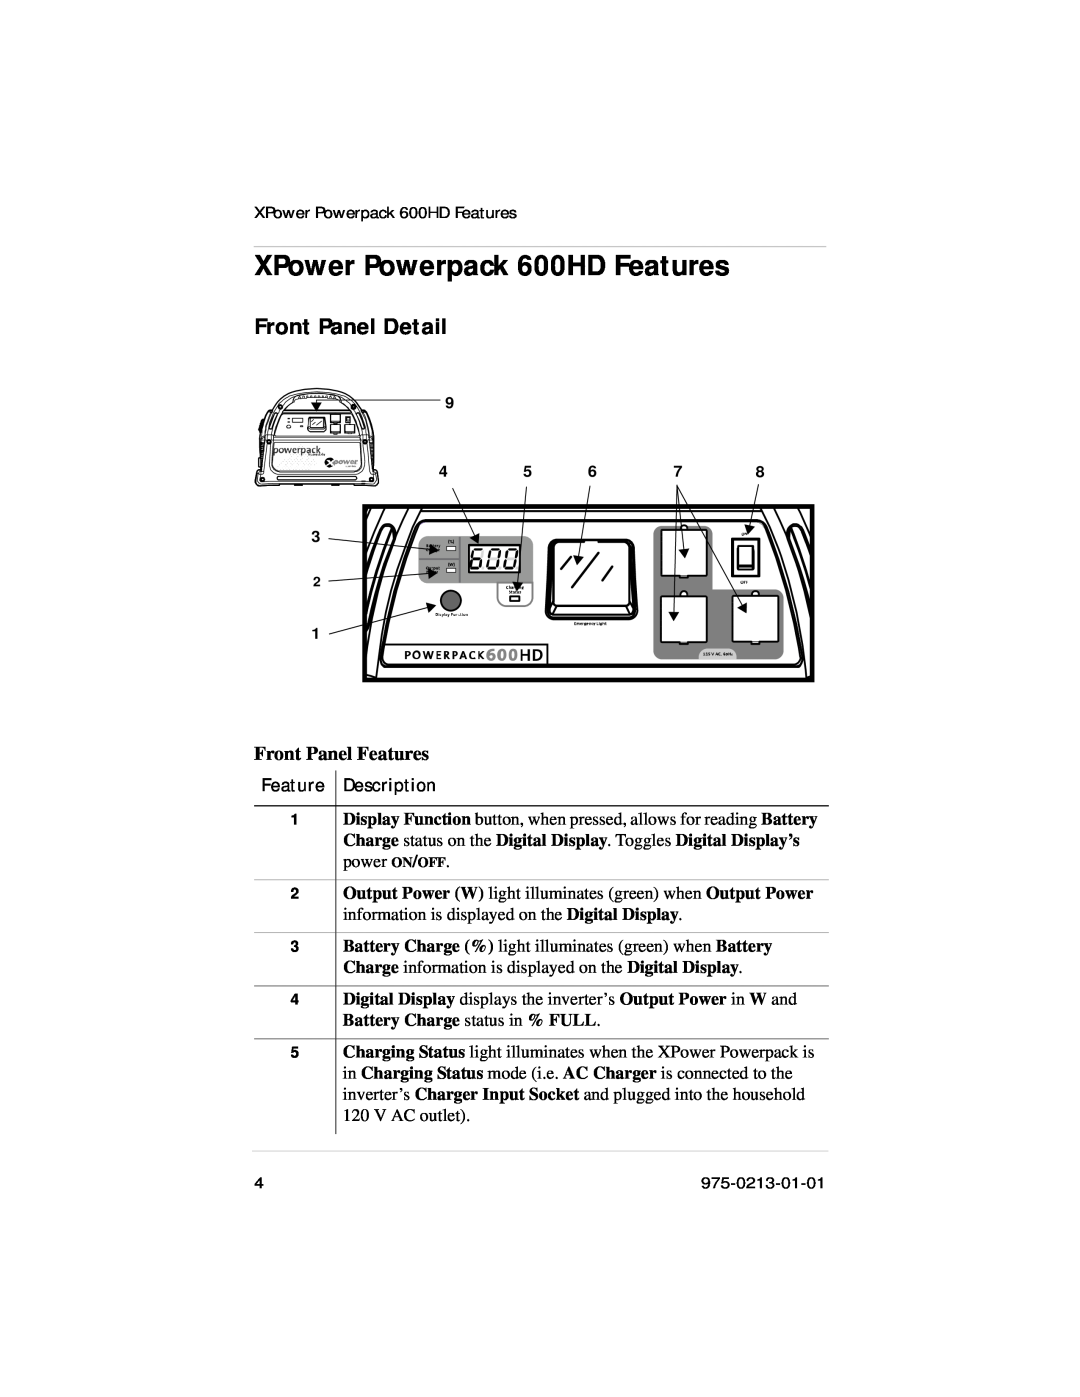 Xantrex Technology manual XPower Powerpack 600HD Features, Front Panel Detail, Front Panel Features, Feature Description 